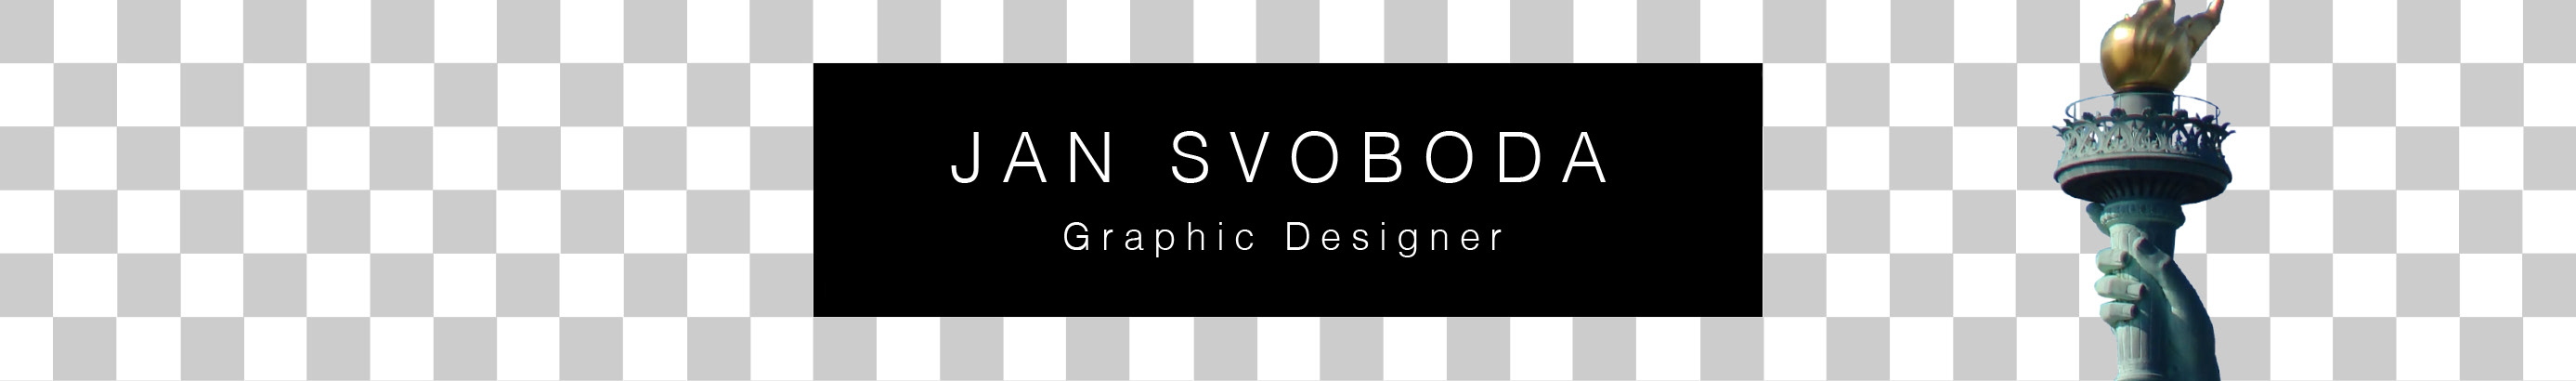 Jan Svoboda's profile banner